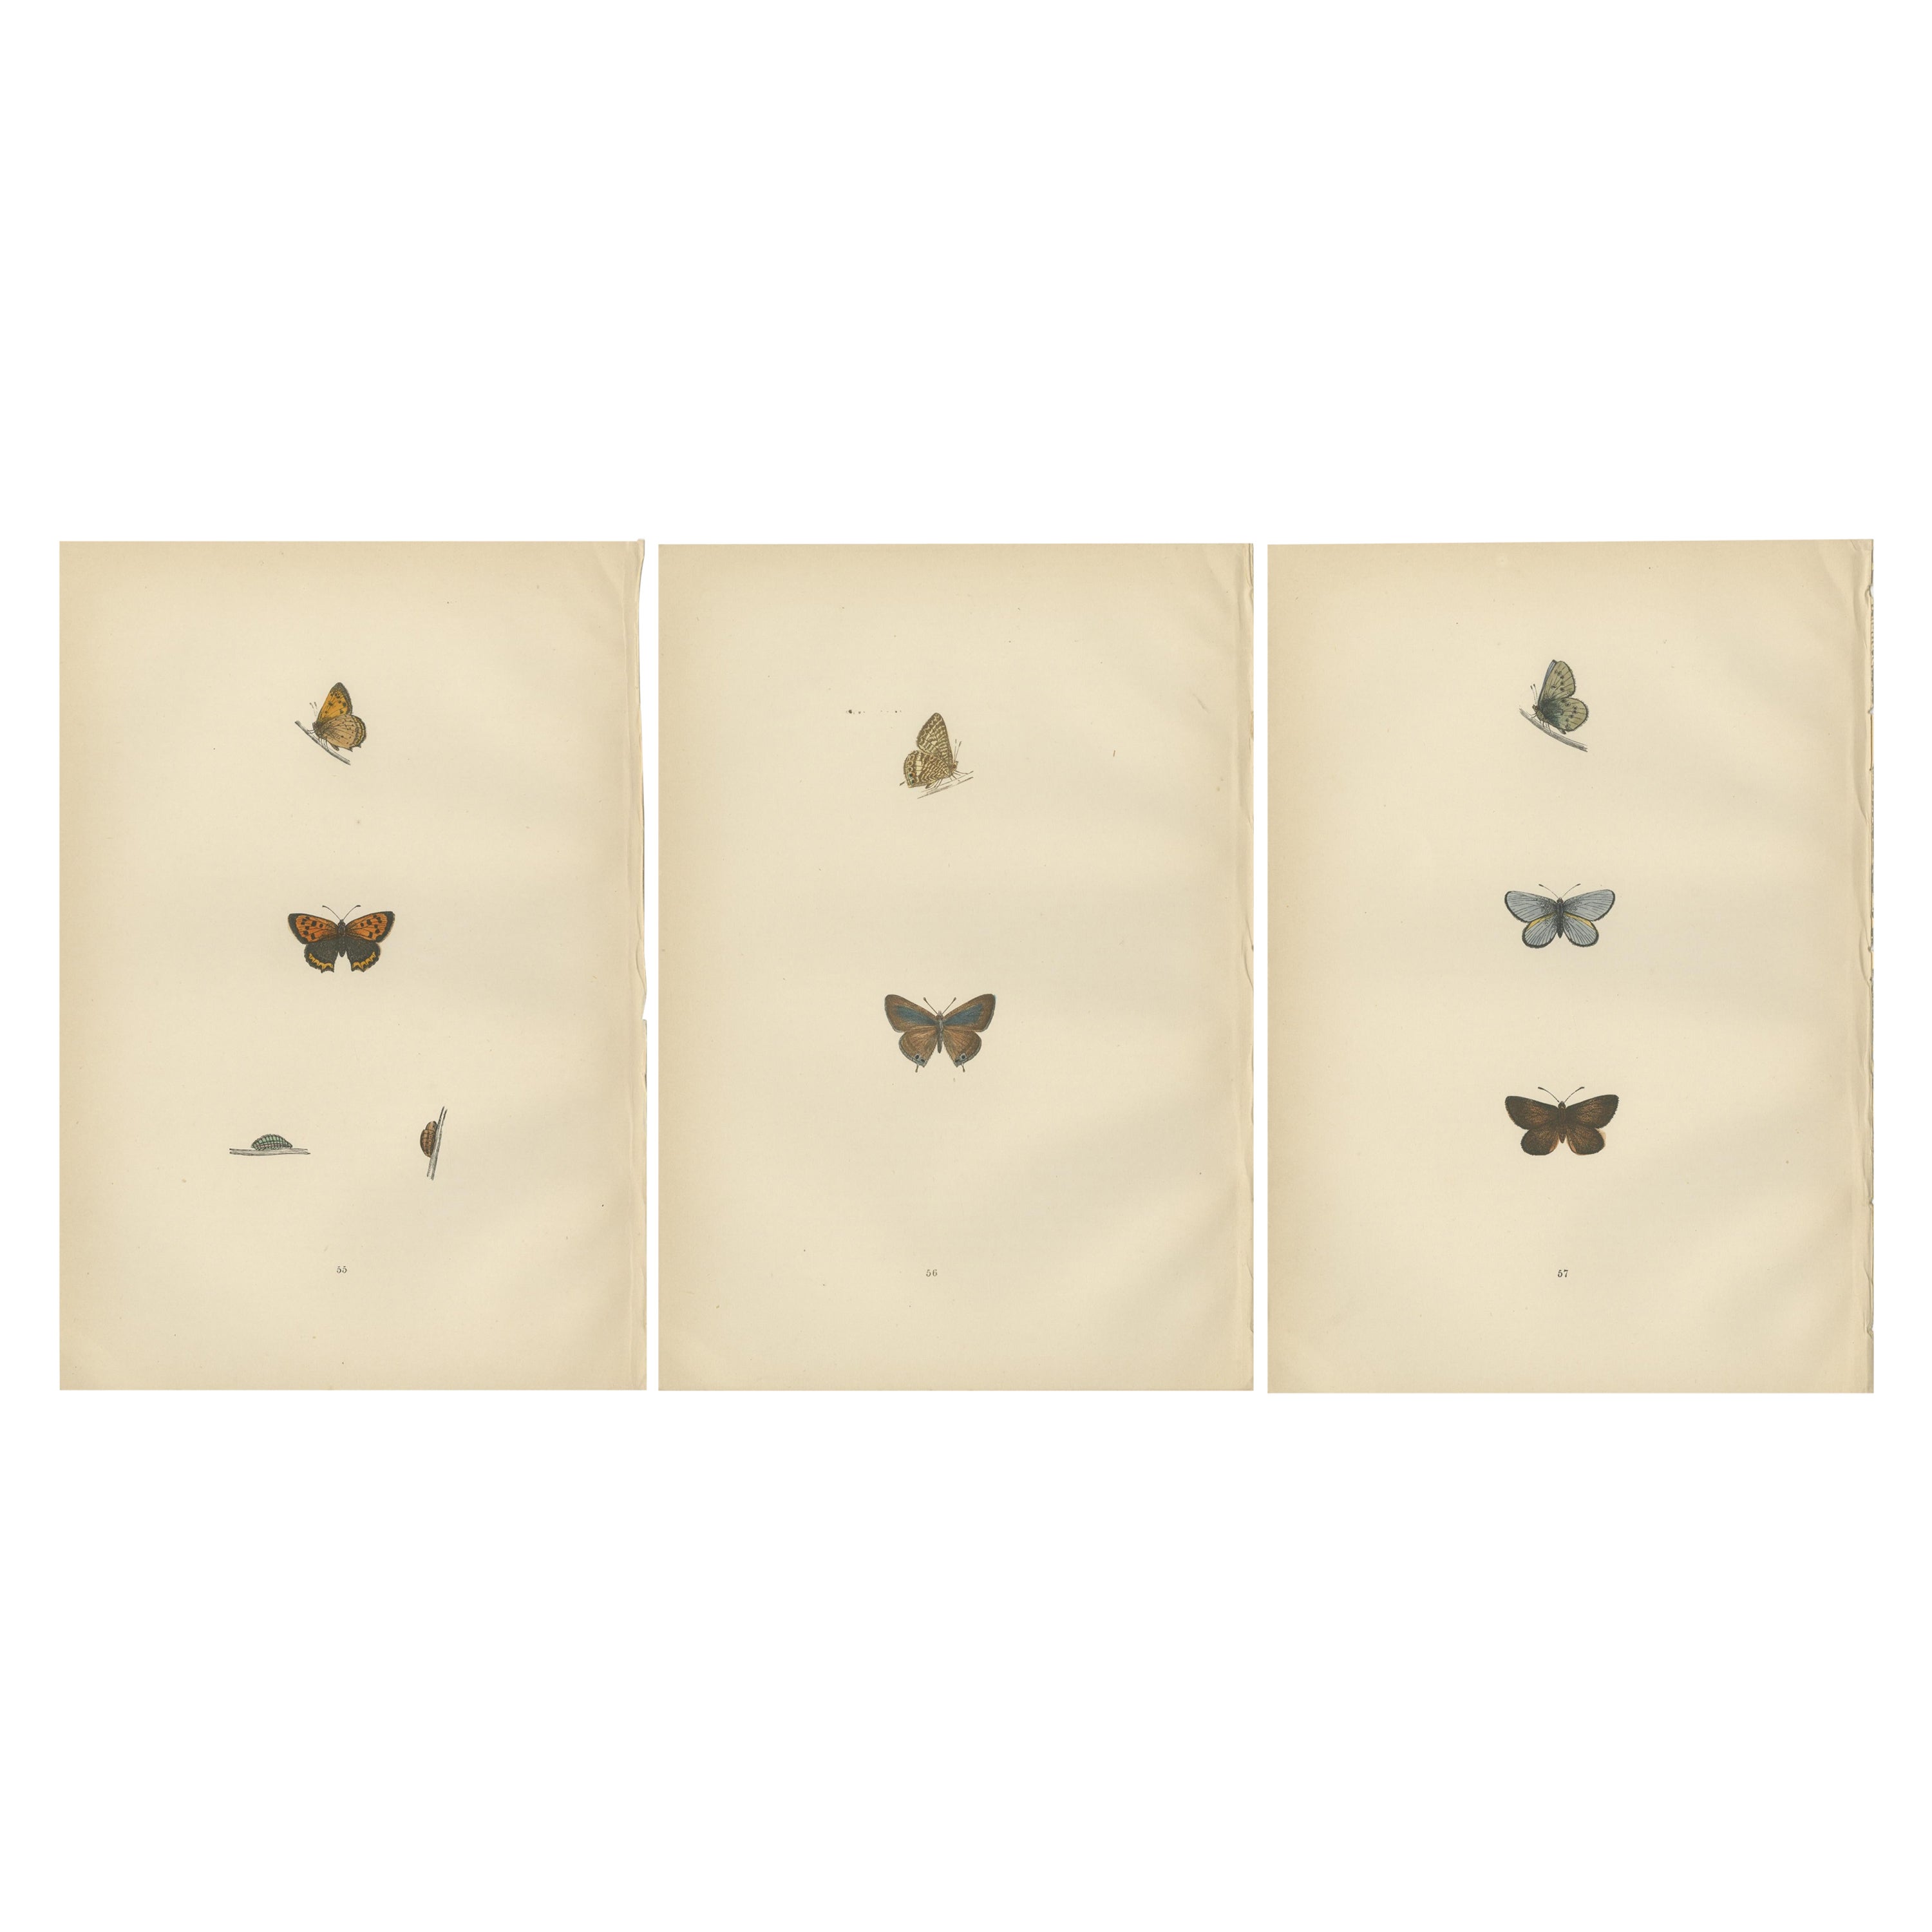 Chromatic Splendor: The Copper, Argus, and Blue of Morris's 1890 Lepidoptera For Sale